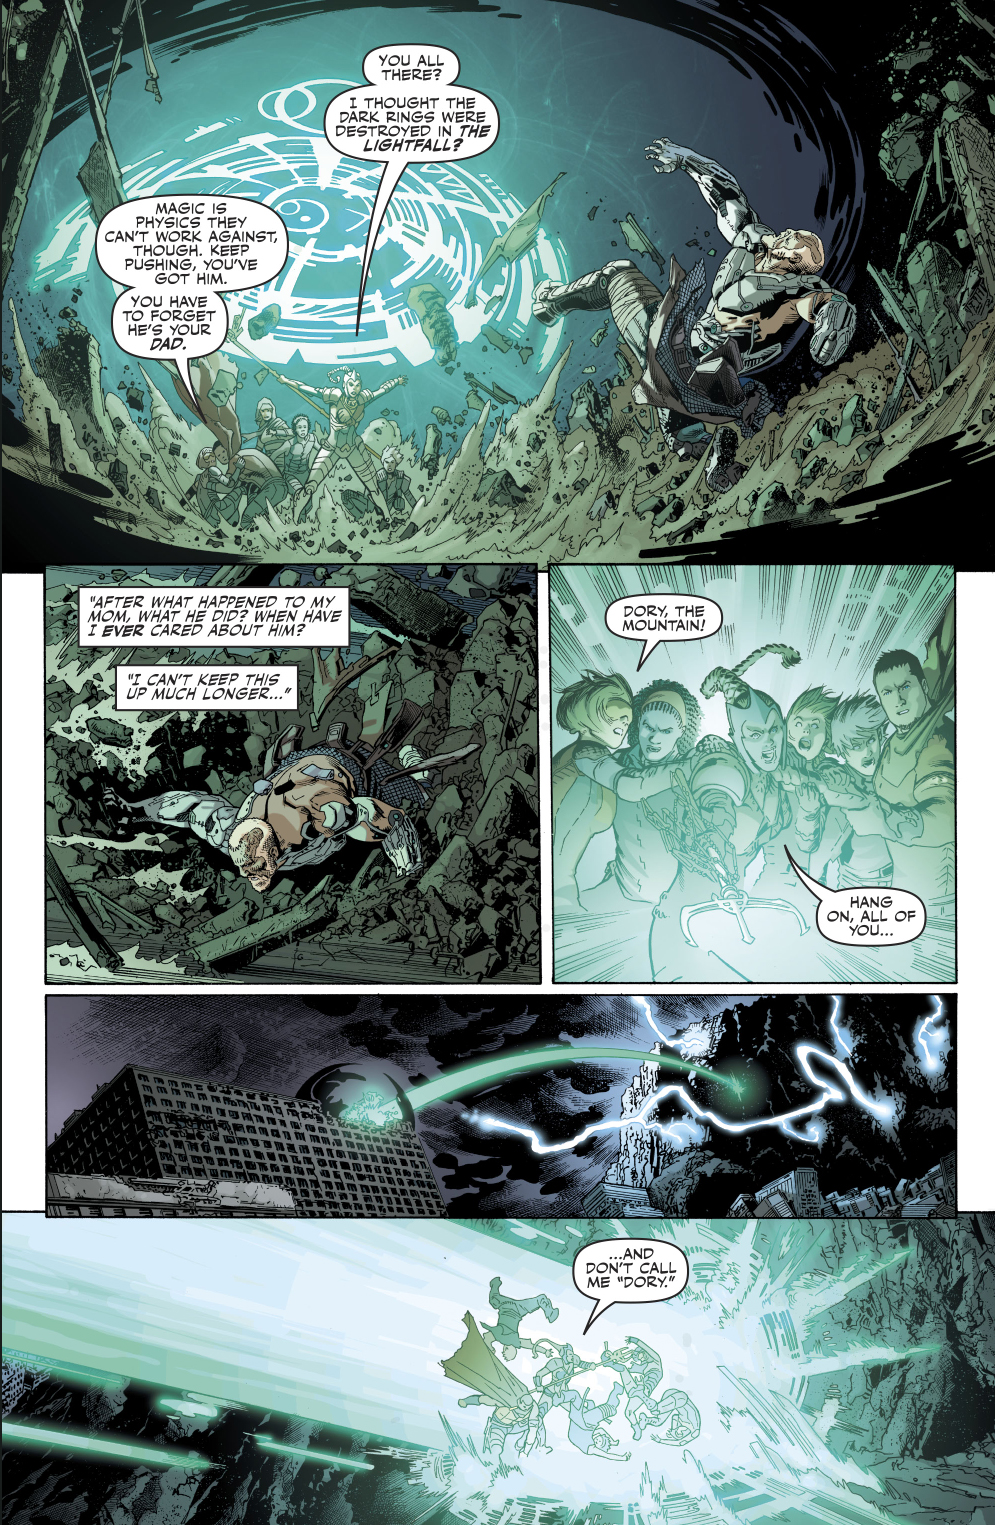 Cyborg Aquaman VS Justice League's Children 